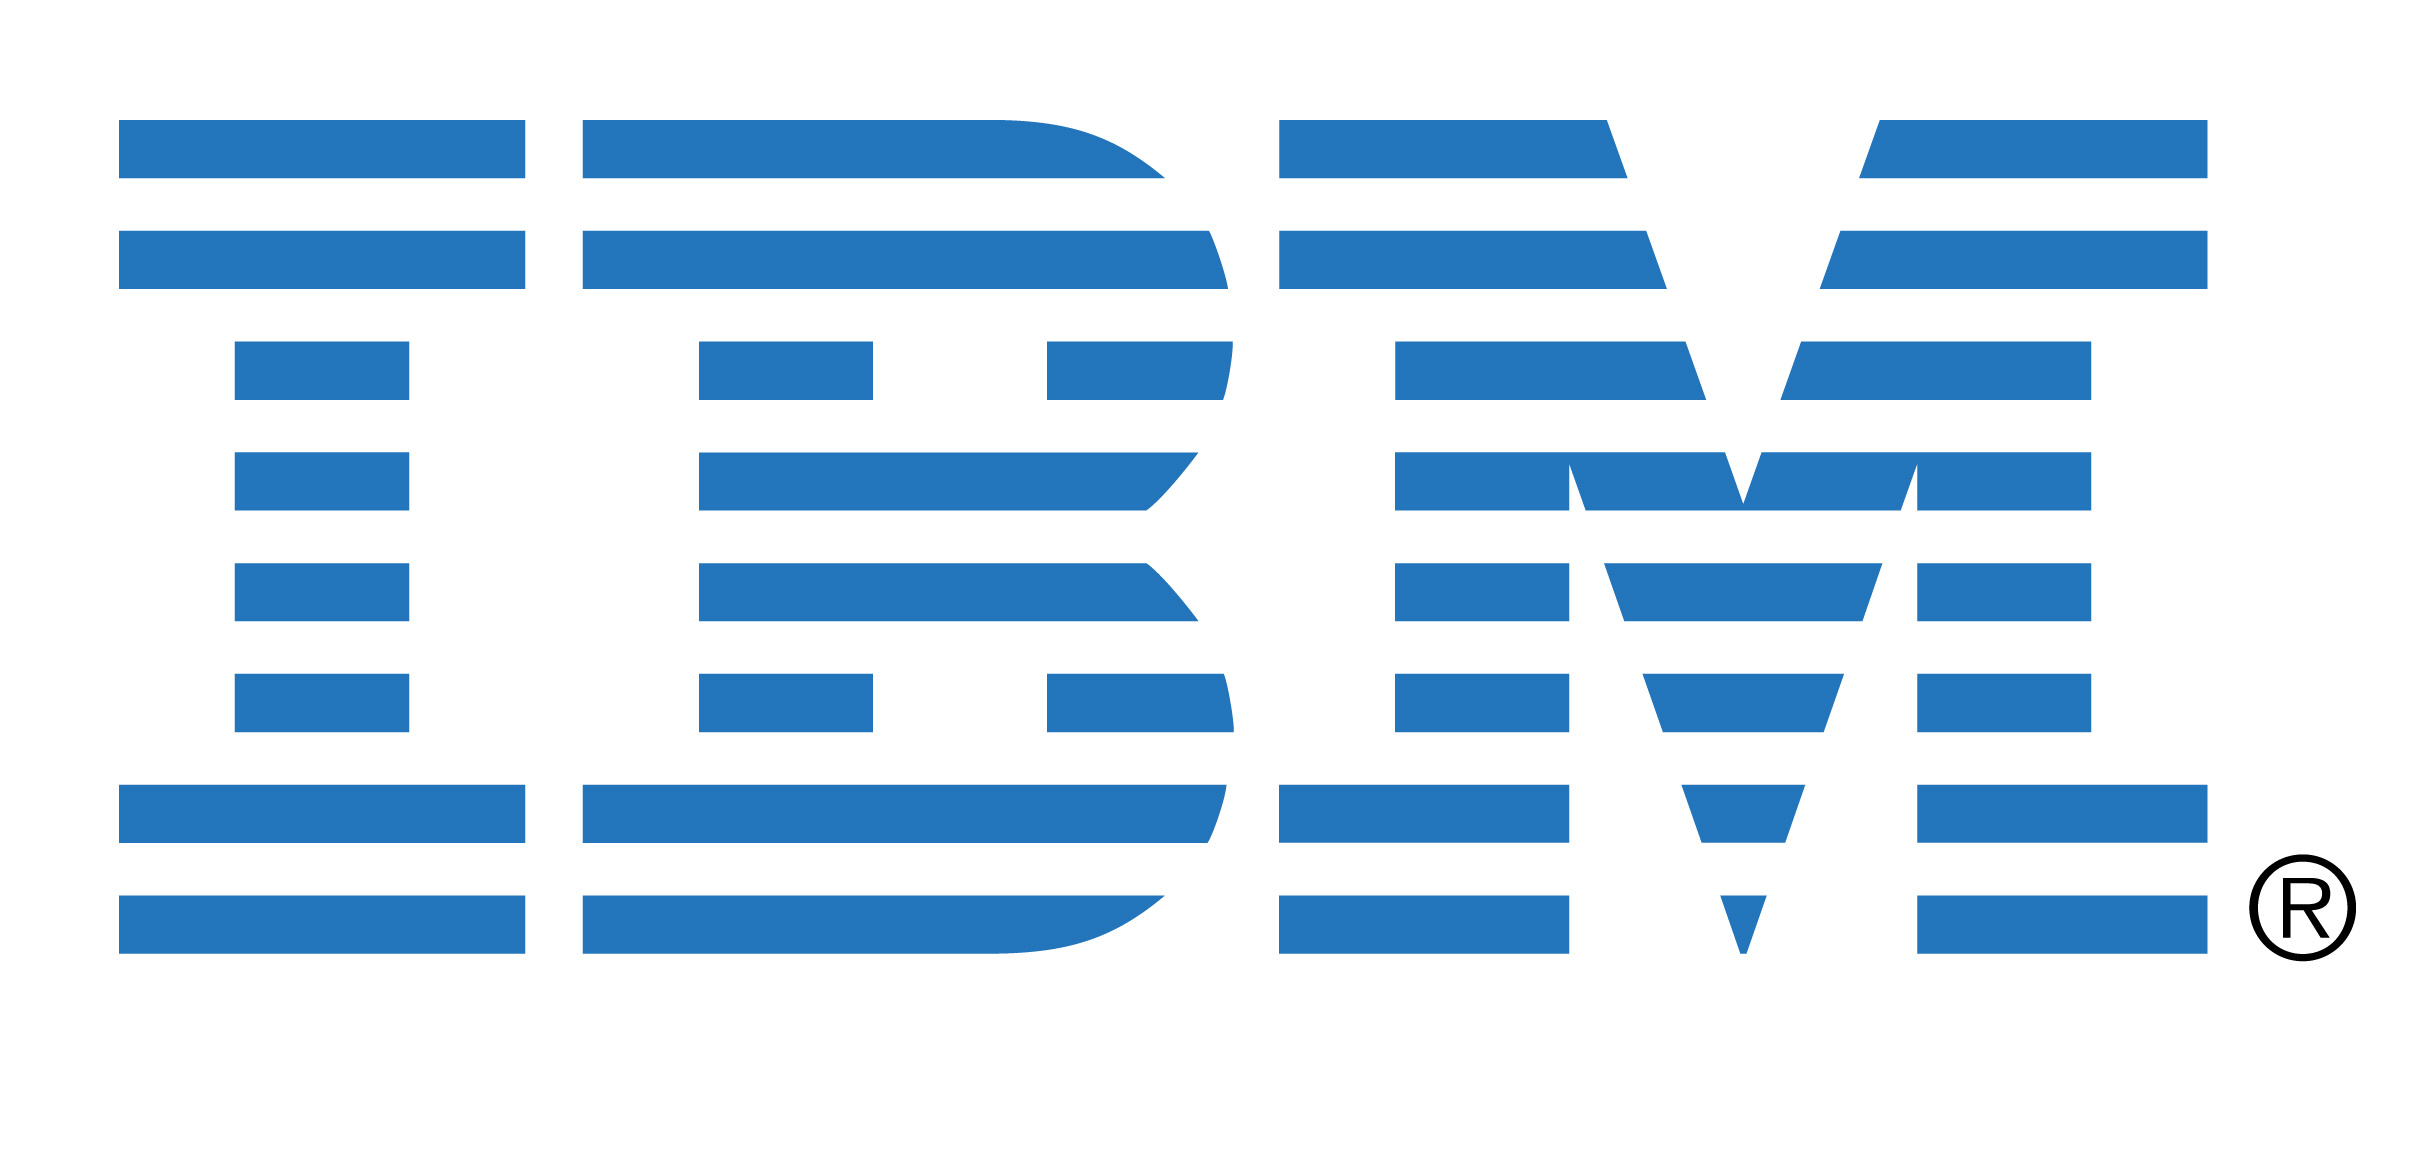 IBM - TAHMO 2440x1170